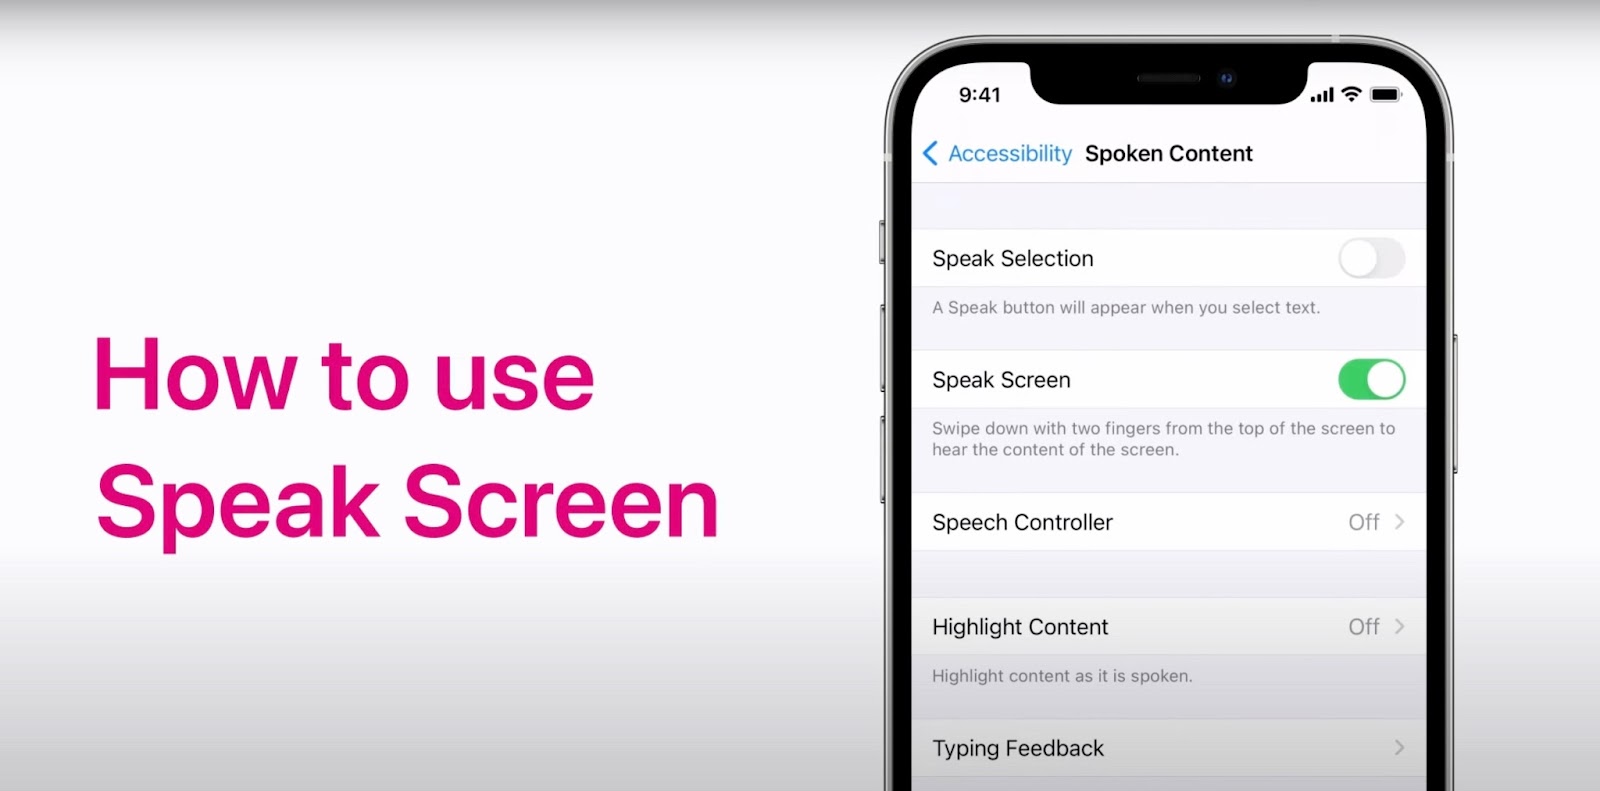 Phone screen with "Speak Screen" function